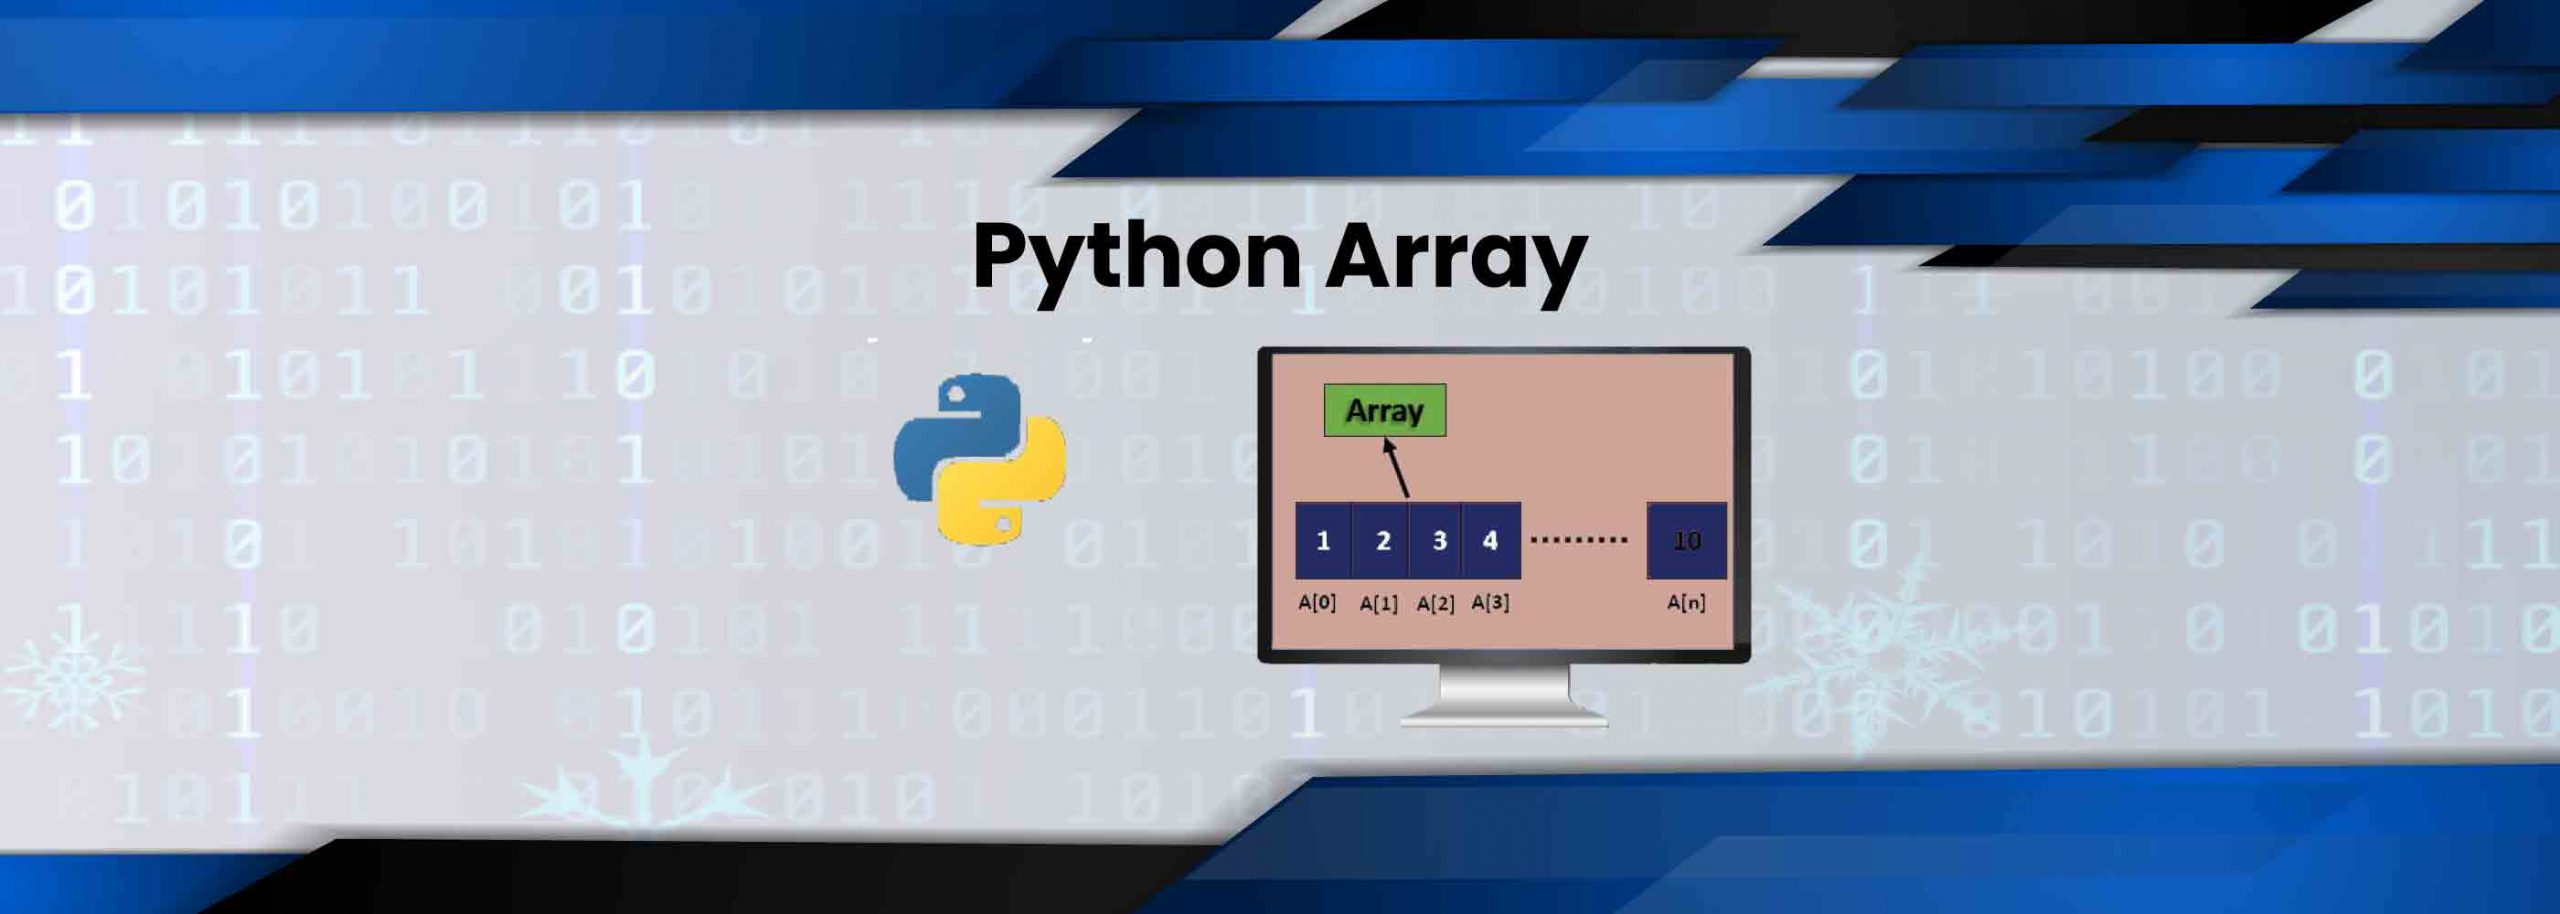 Python Array Scaled 